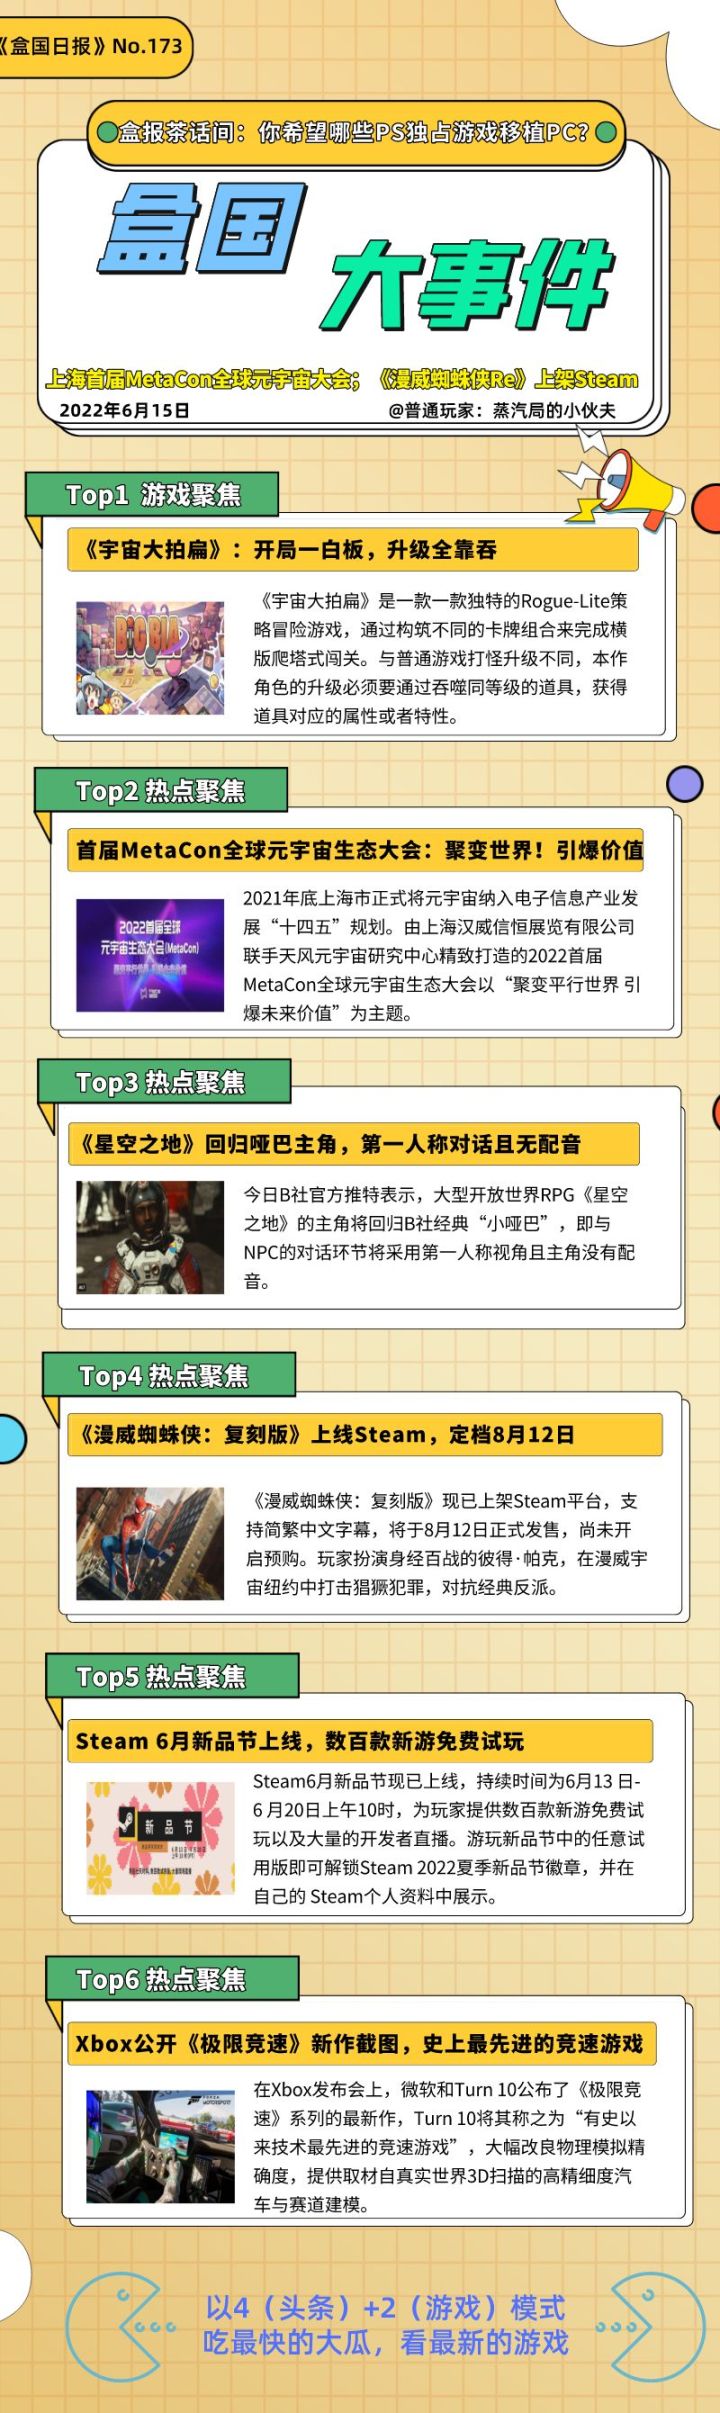 【PC游戏】盒国日报|上海首届MetaCon全球元宇宙大会；《漫威蜘蛛侠Re》上架Steam